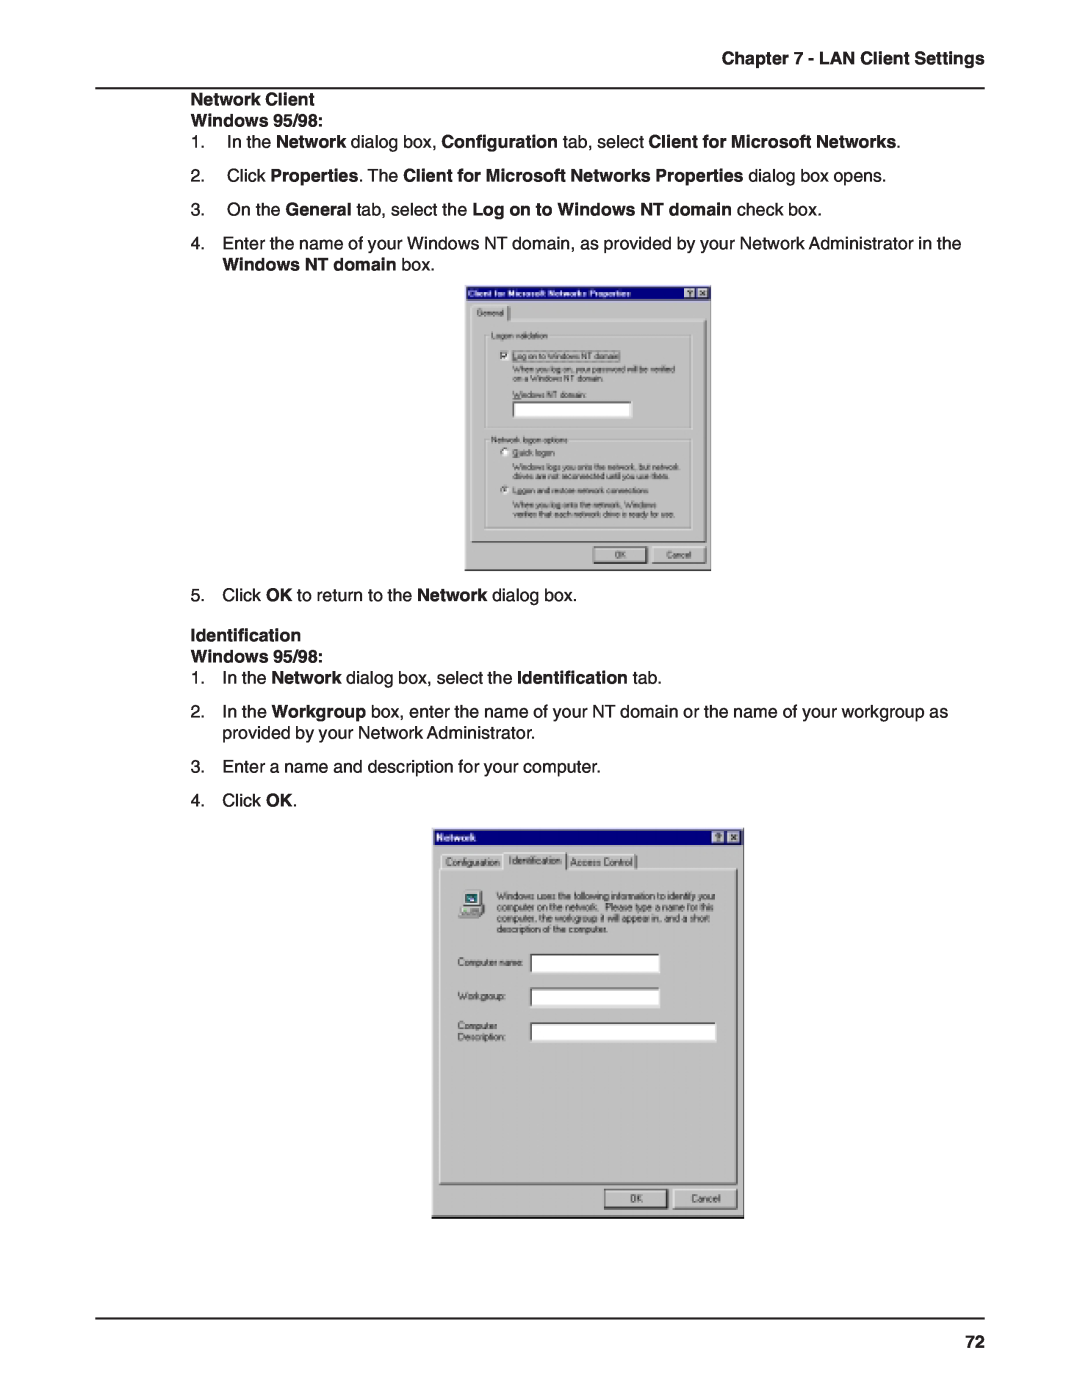 Multi-Tech Systems RF802EW manual LAN Client Settings Network Client Windows 95/98, Identification Windows 95/98 